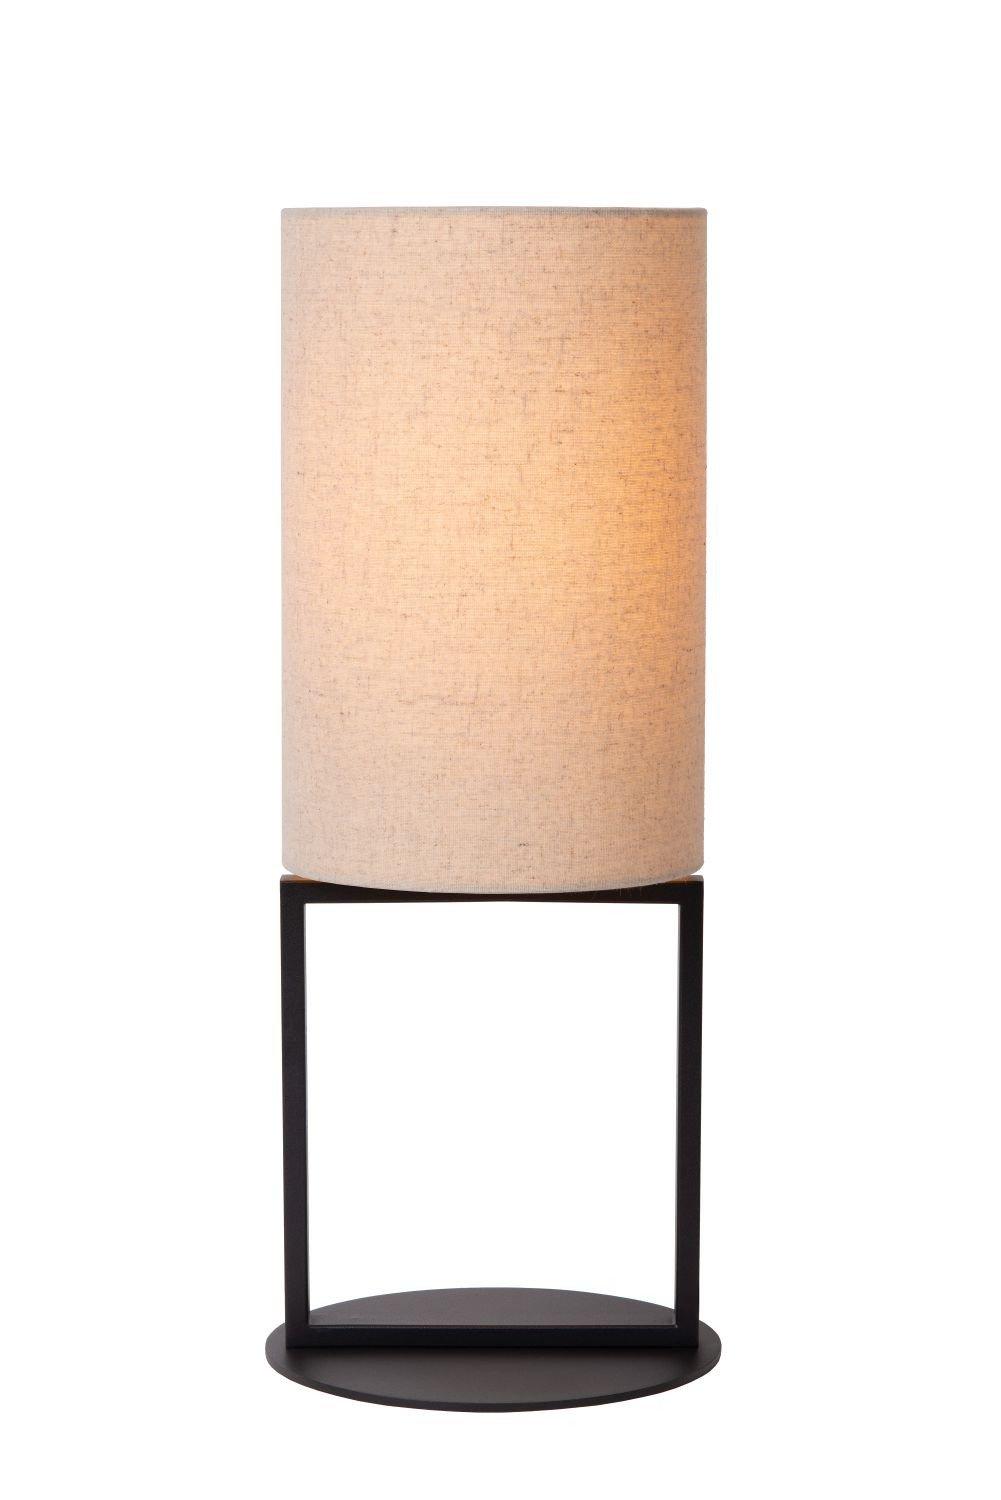 Lucide HERMAN Table Lamp E27 Cylinder Shape 40W Scandinavian Desk Light - 20 cm